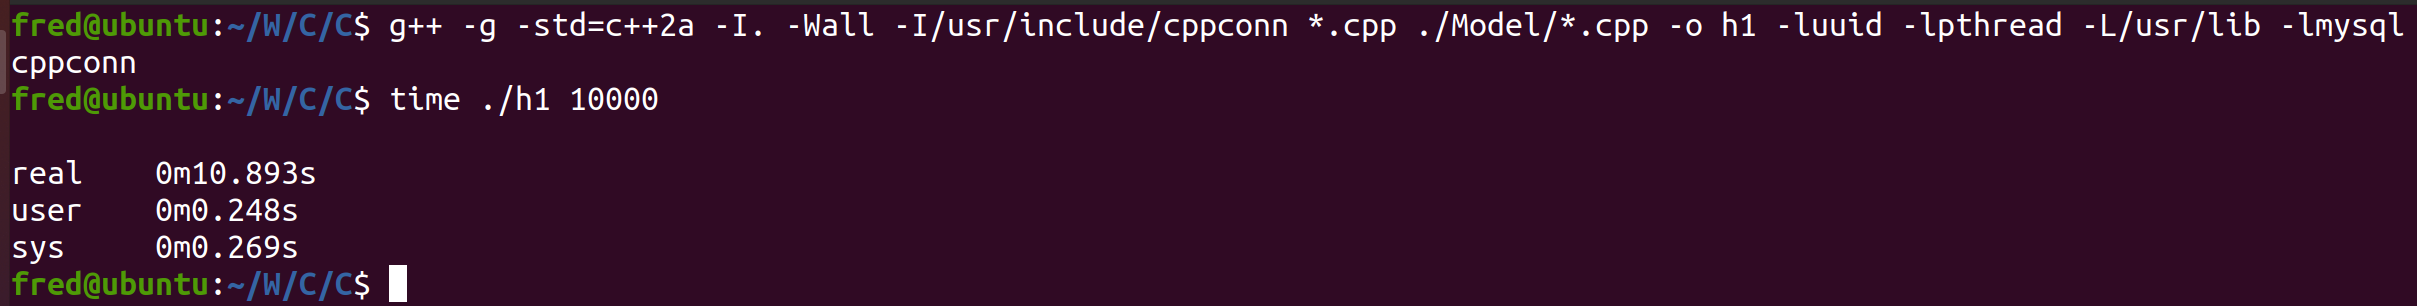 C++ cppconn insert into mysql tables